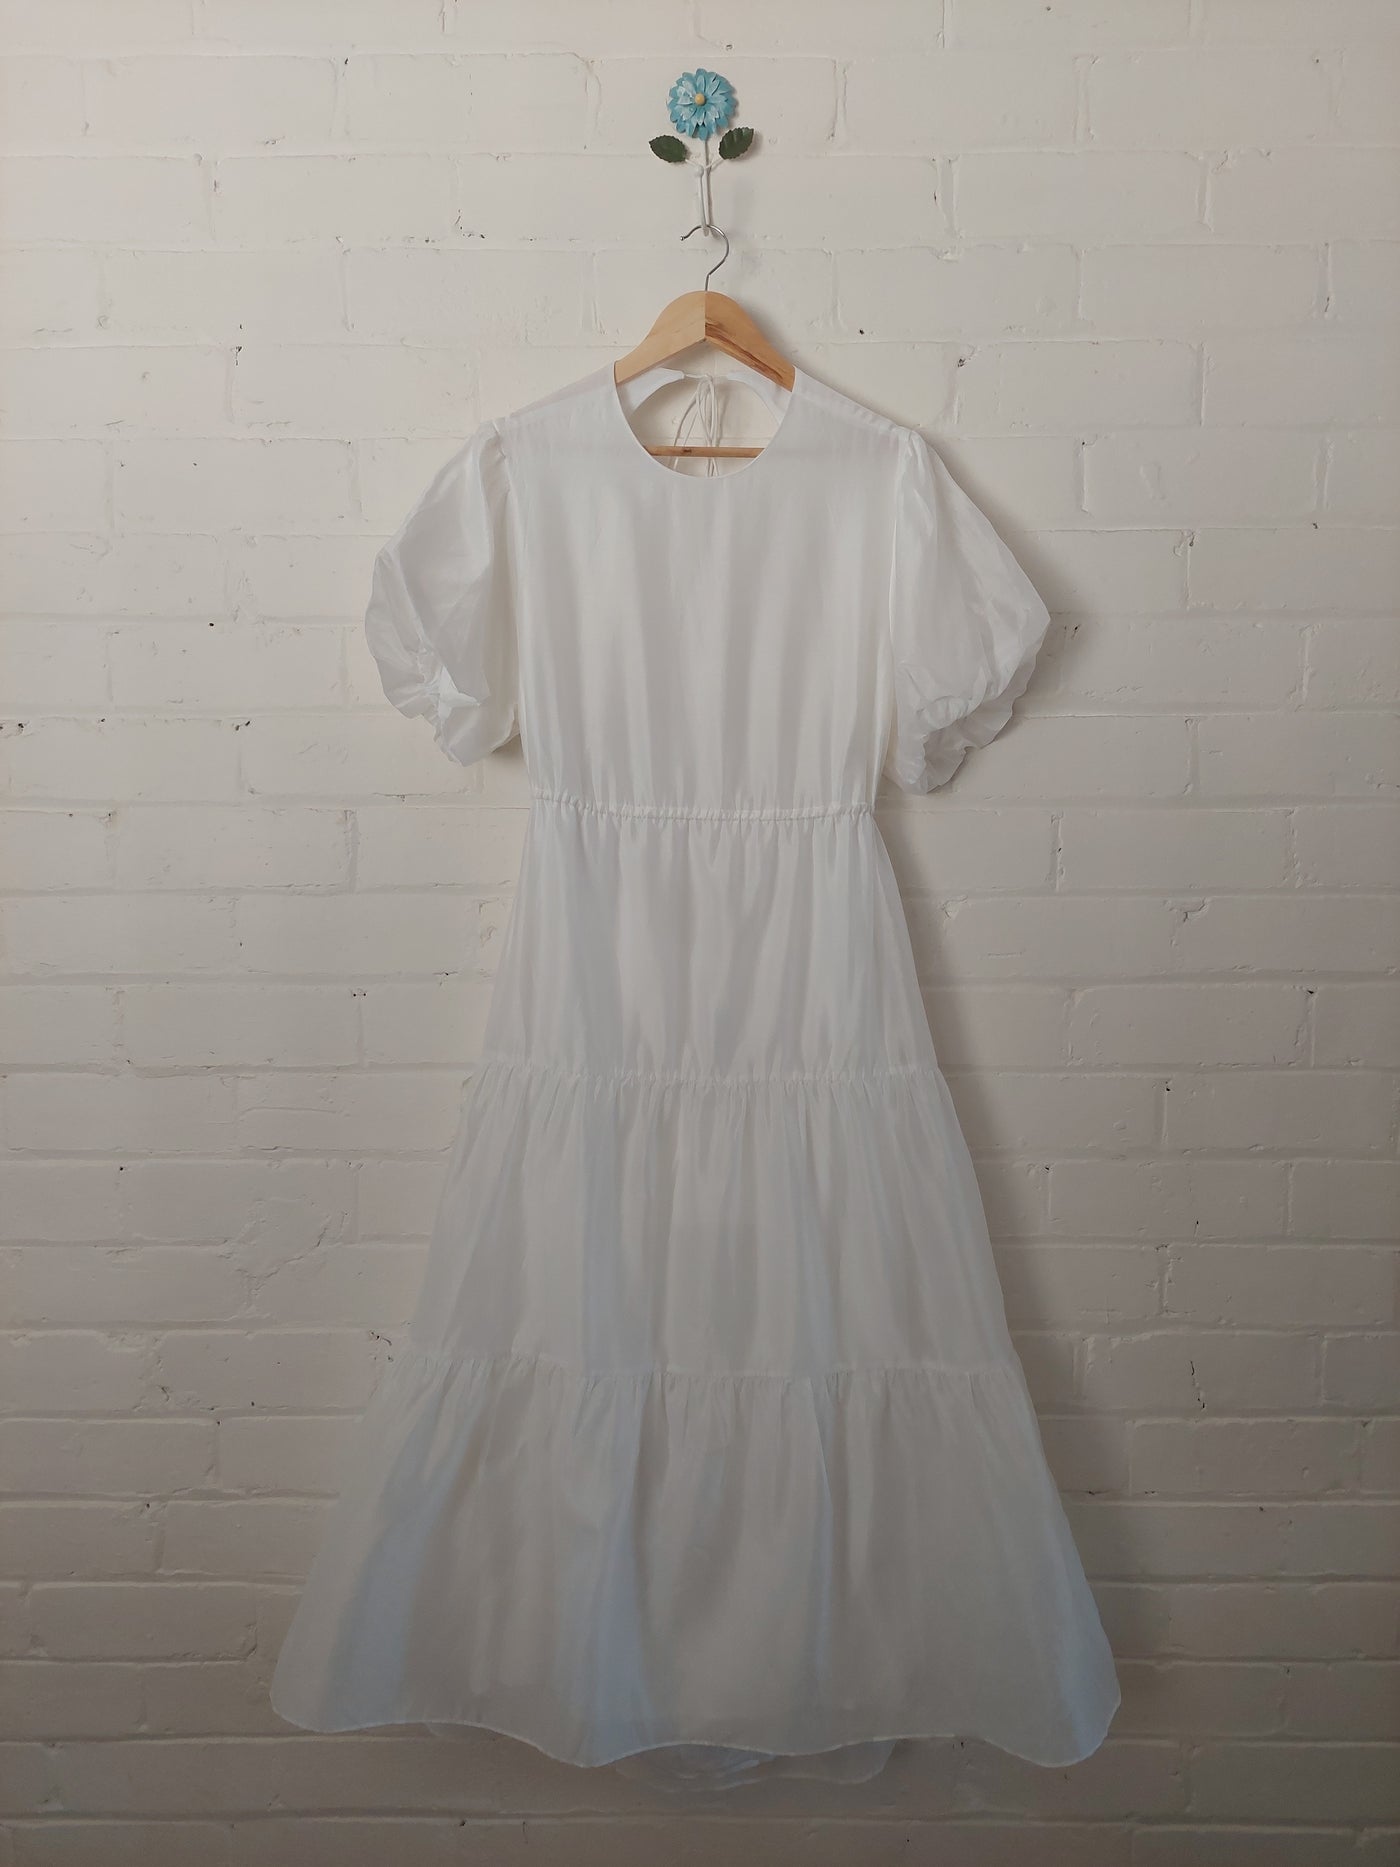 Sir the Label BNWT 'Franc' Open Back Dress - Chalk White, Size 2 (AU 10 / US 6)